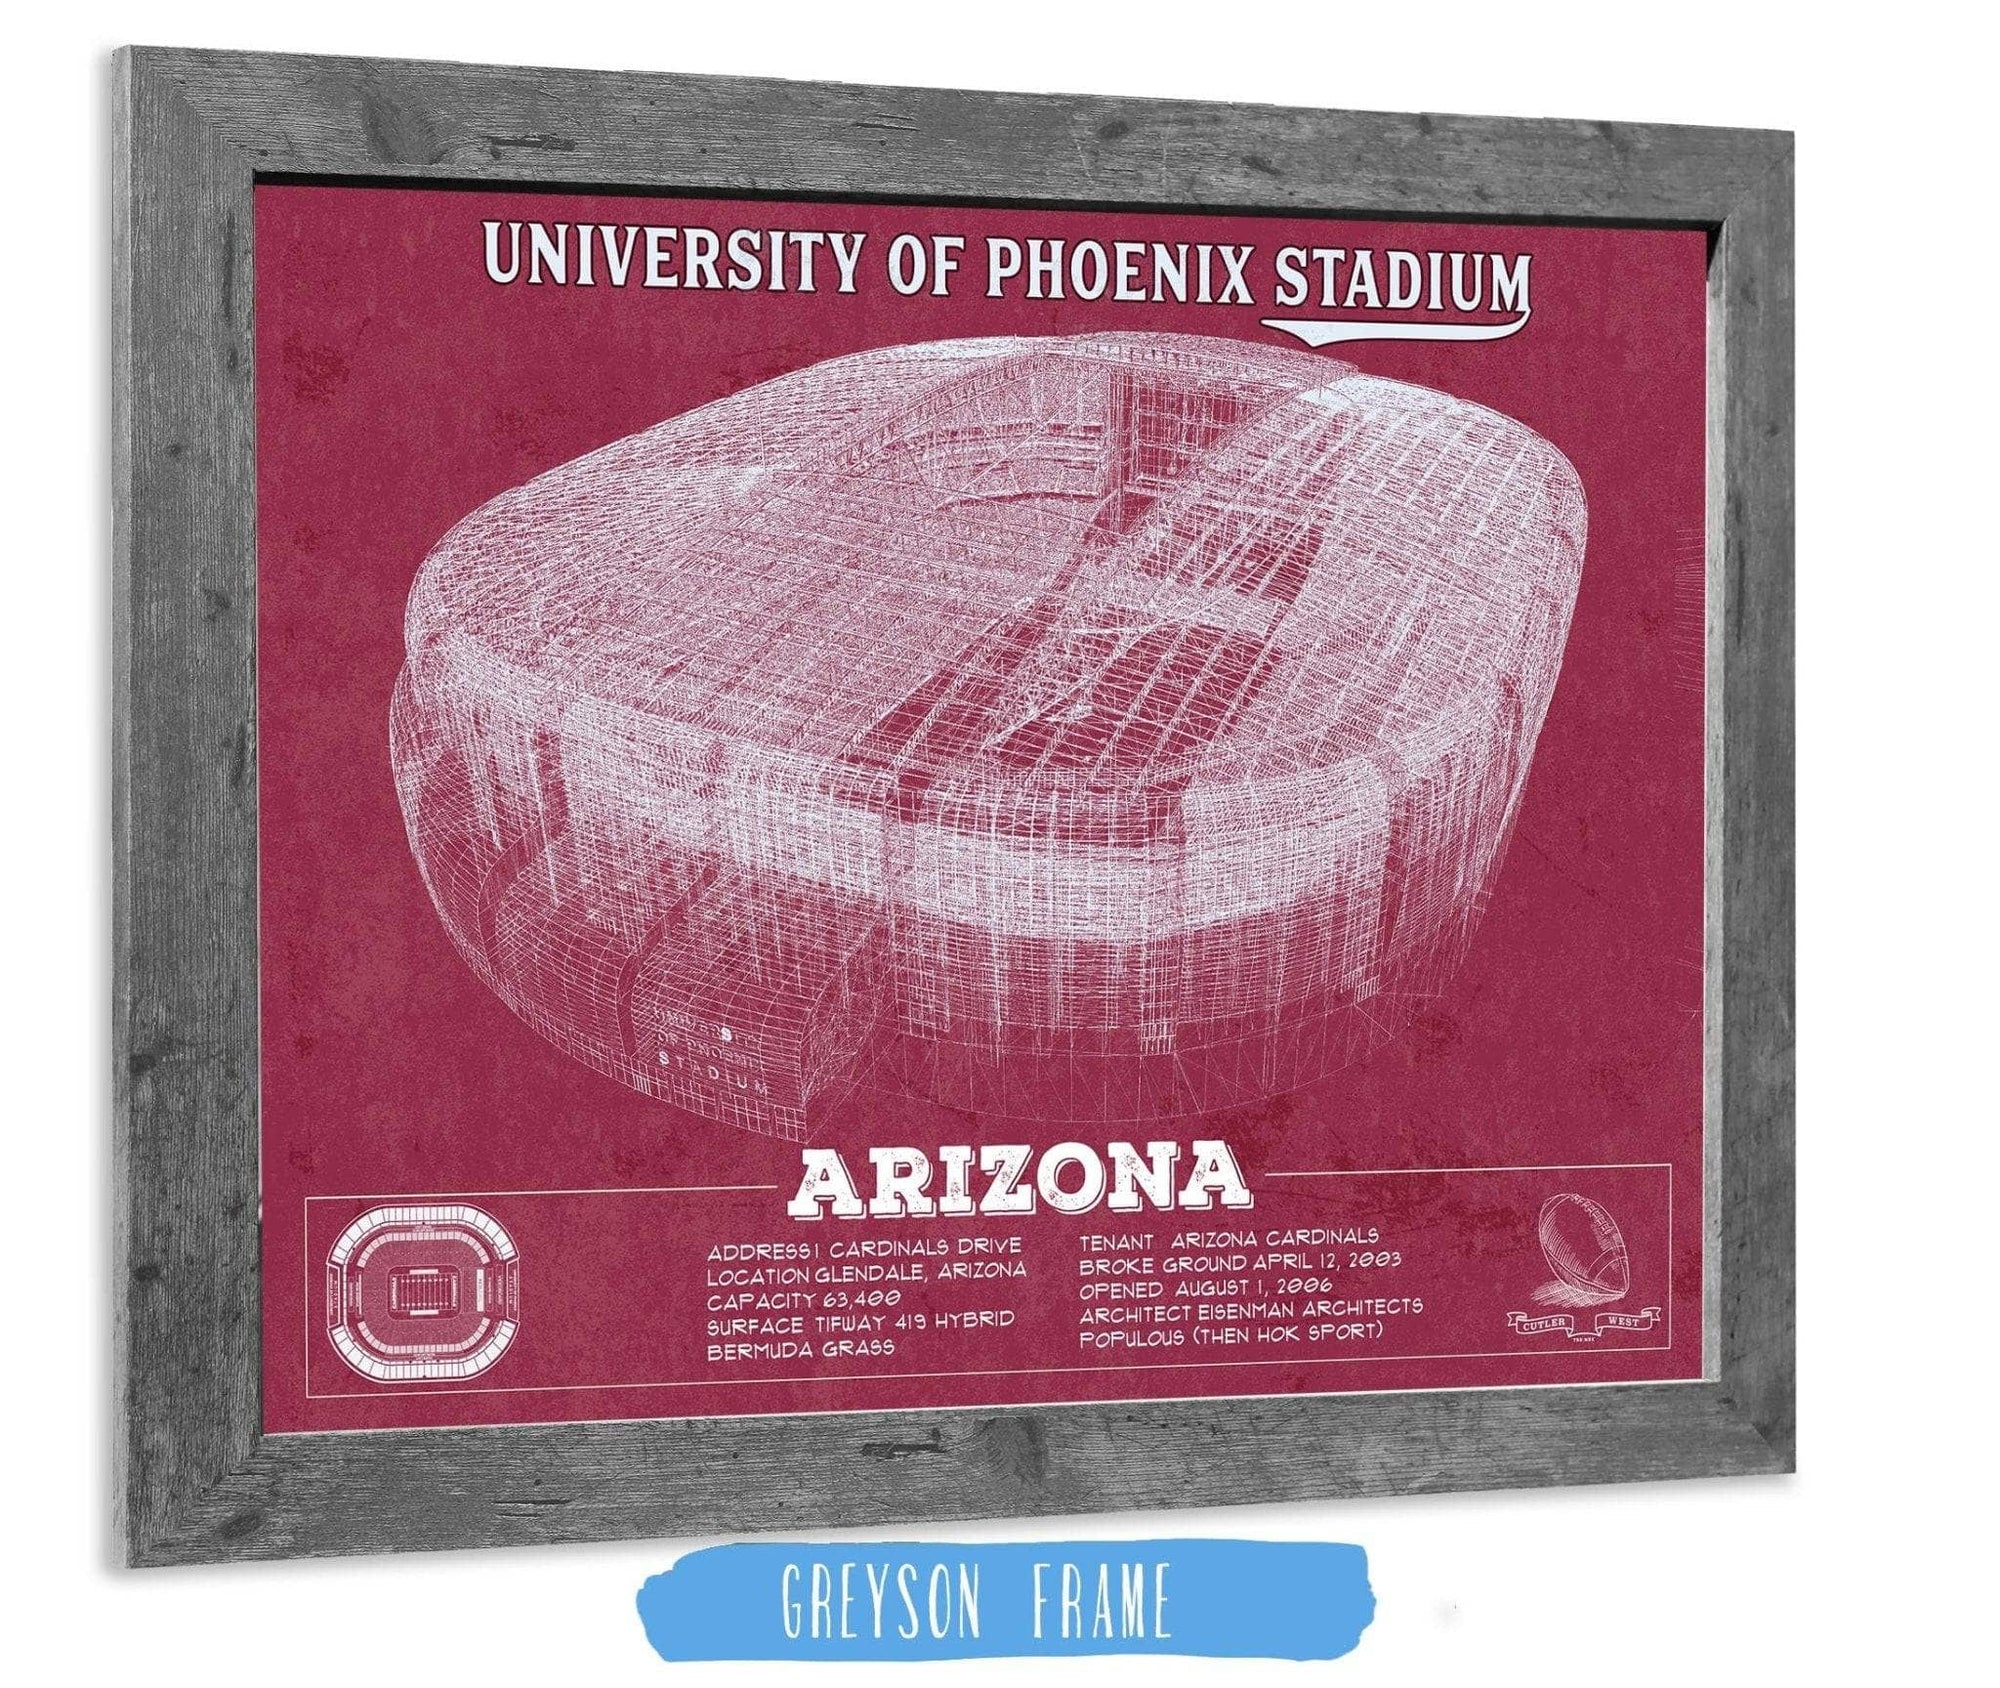 Cutler West Pro Football Collection 14" x 11" / Greyson Frame Arizona Cardinals - University of Phoenix Stadium Vintage Football Team Color Print 701397572_69199